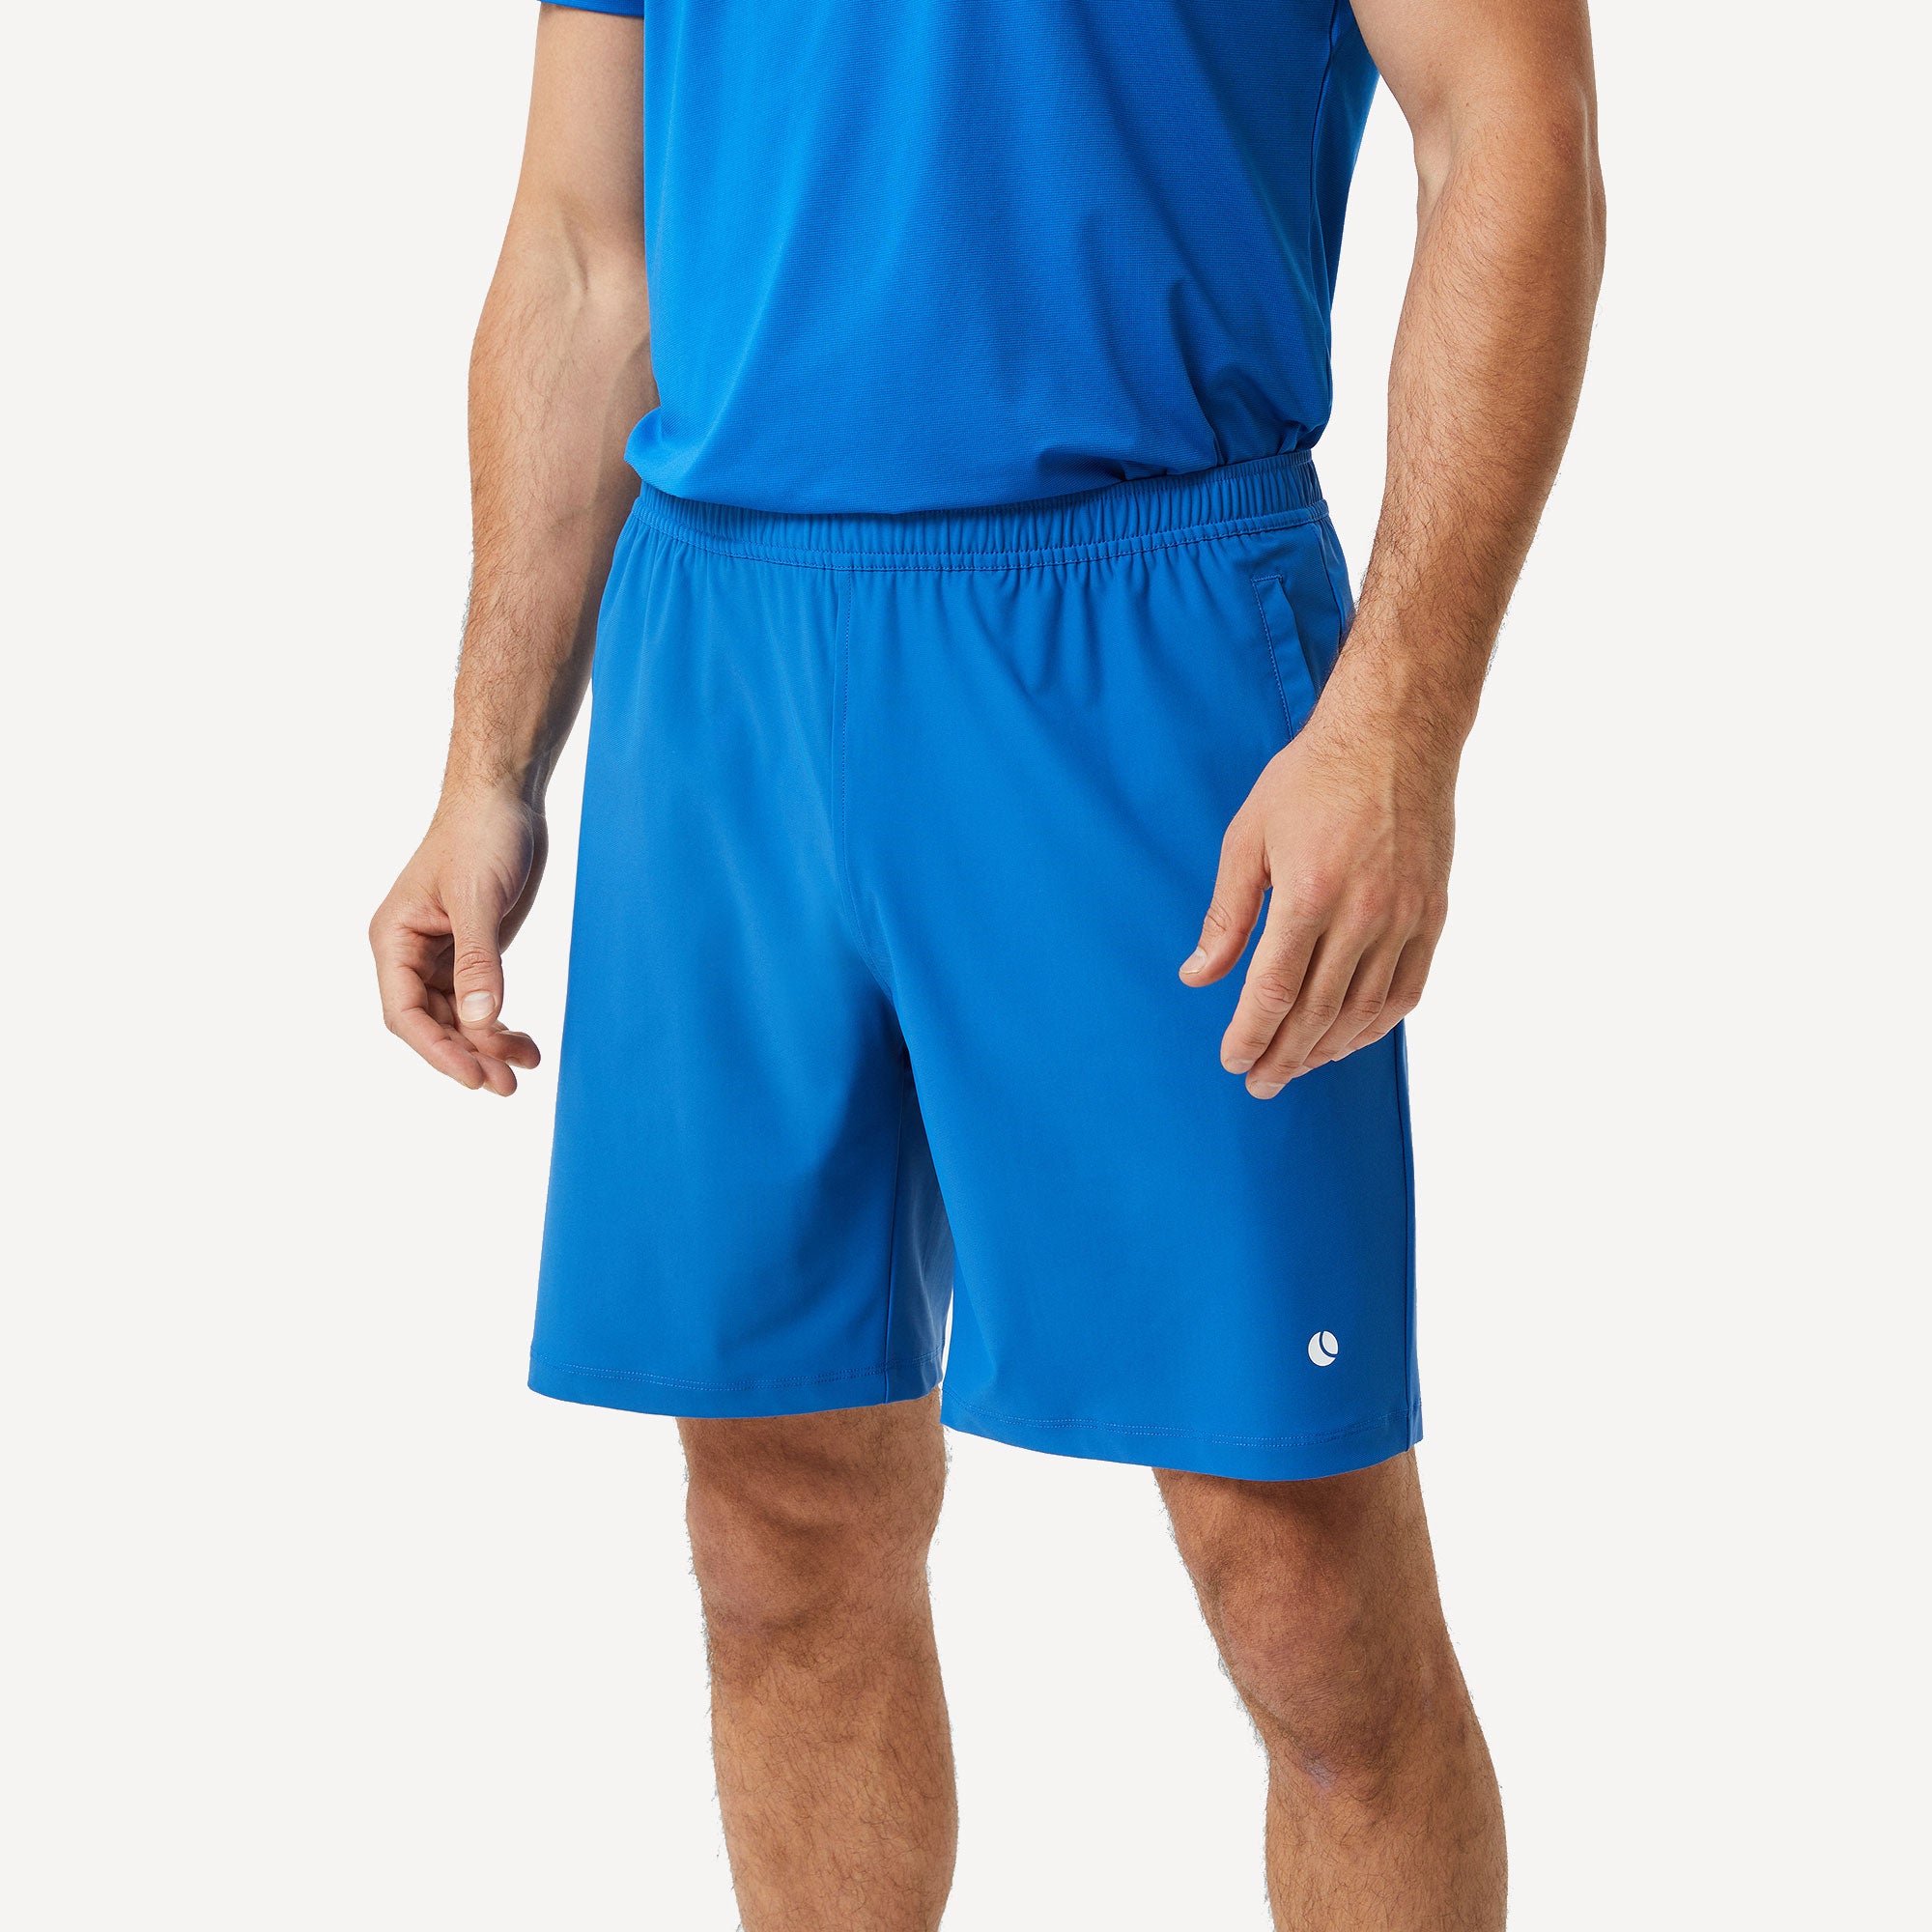 Björn Borg Ace Men's 9-Inch Tennis Shorts - Blue (1)